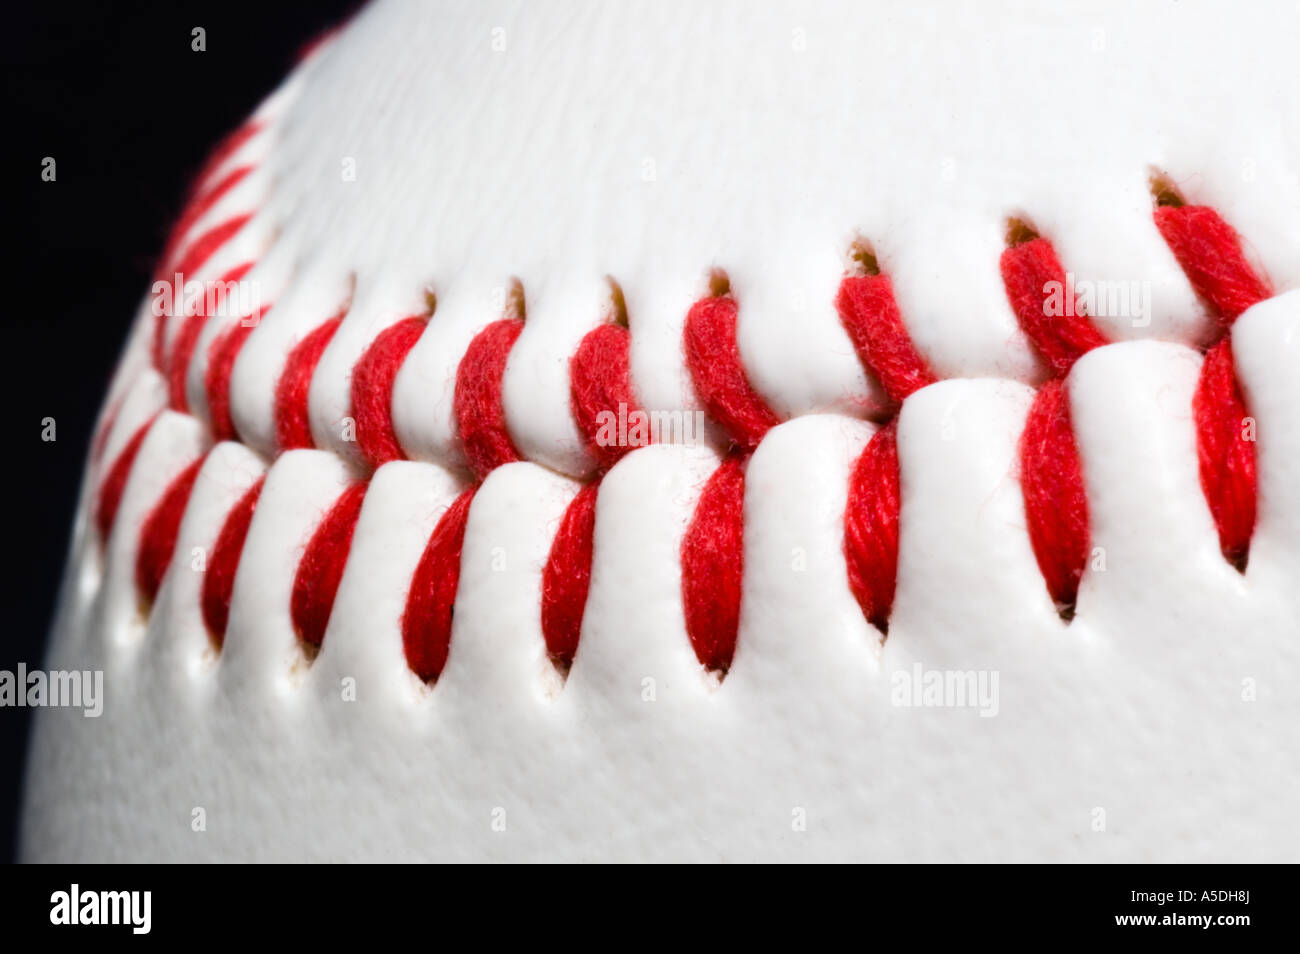 Close up stock photo of the seams on a baseball Stock Photo